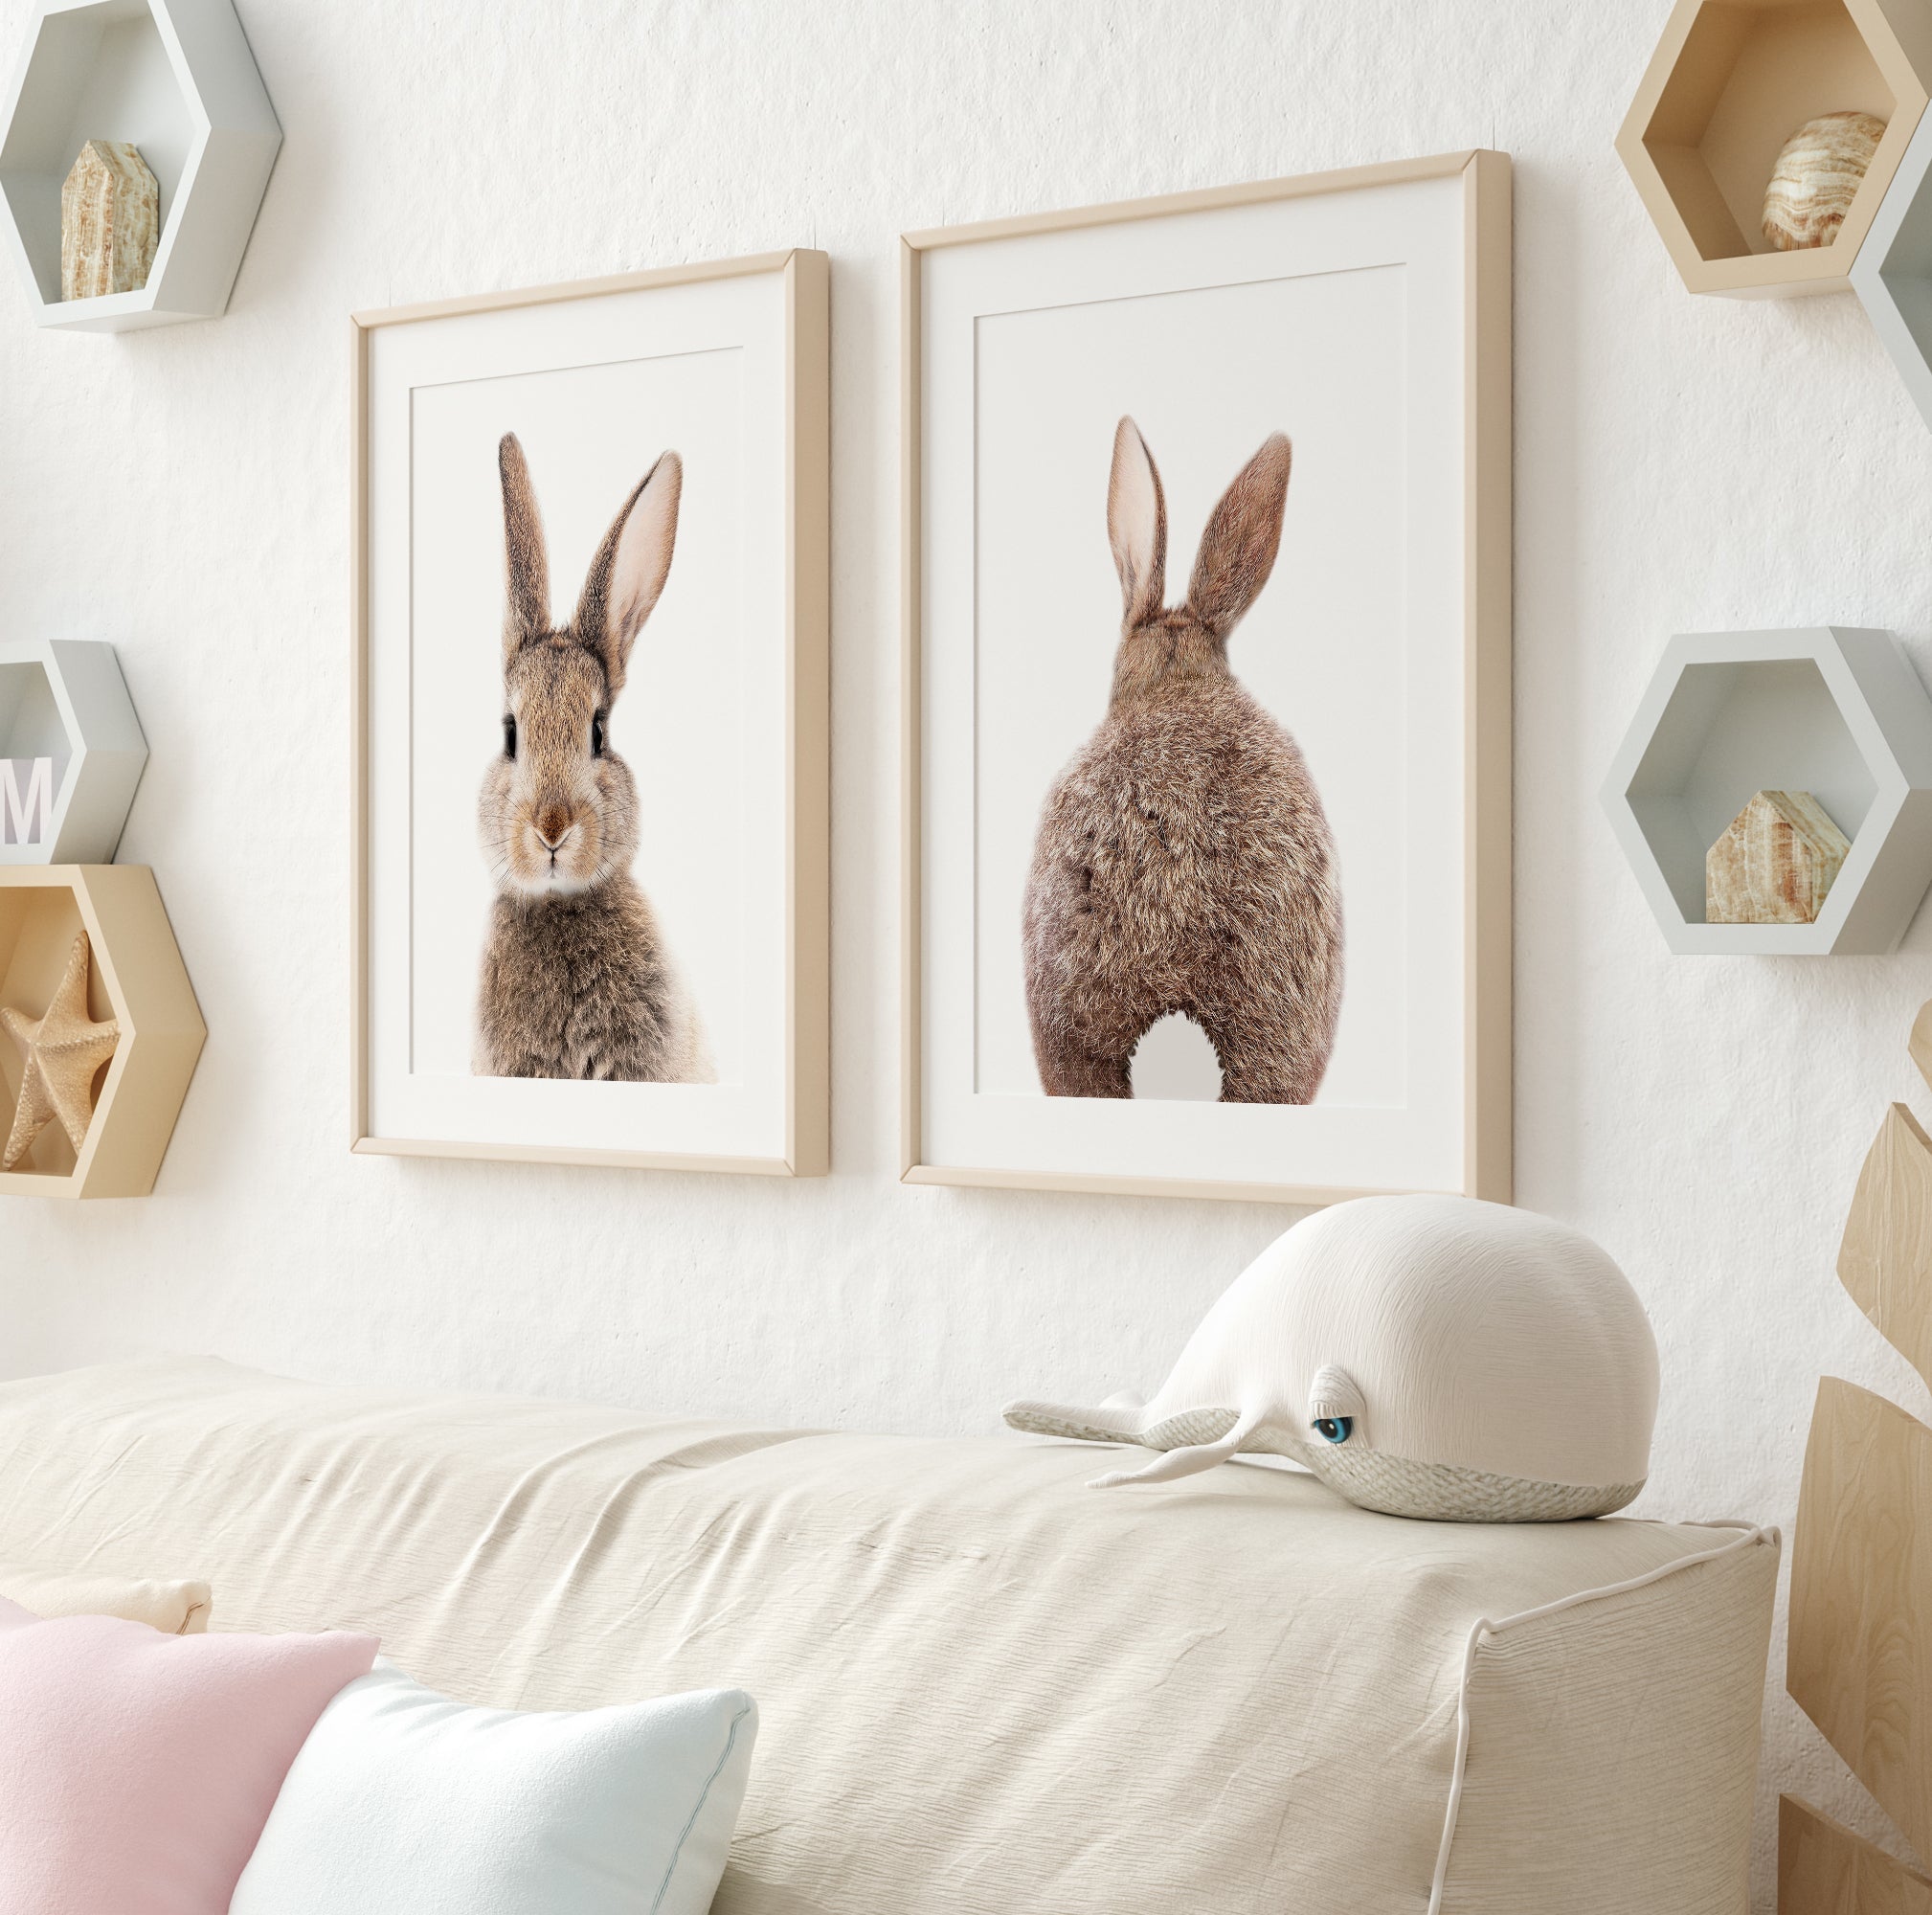 Bunny Portrait Set of 2 Wall Prints